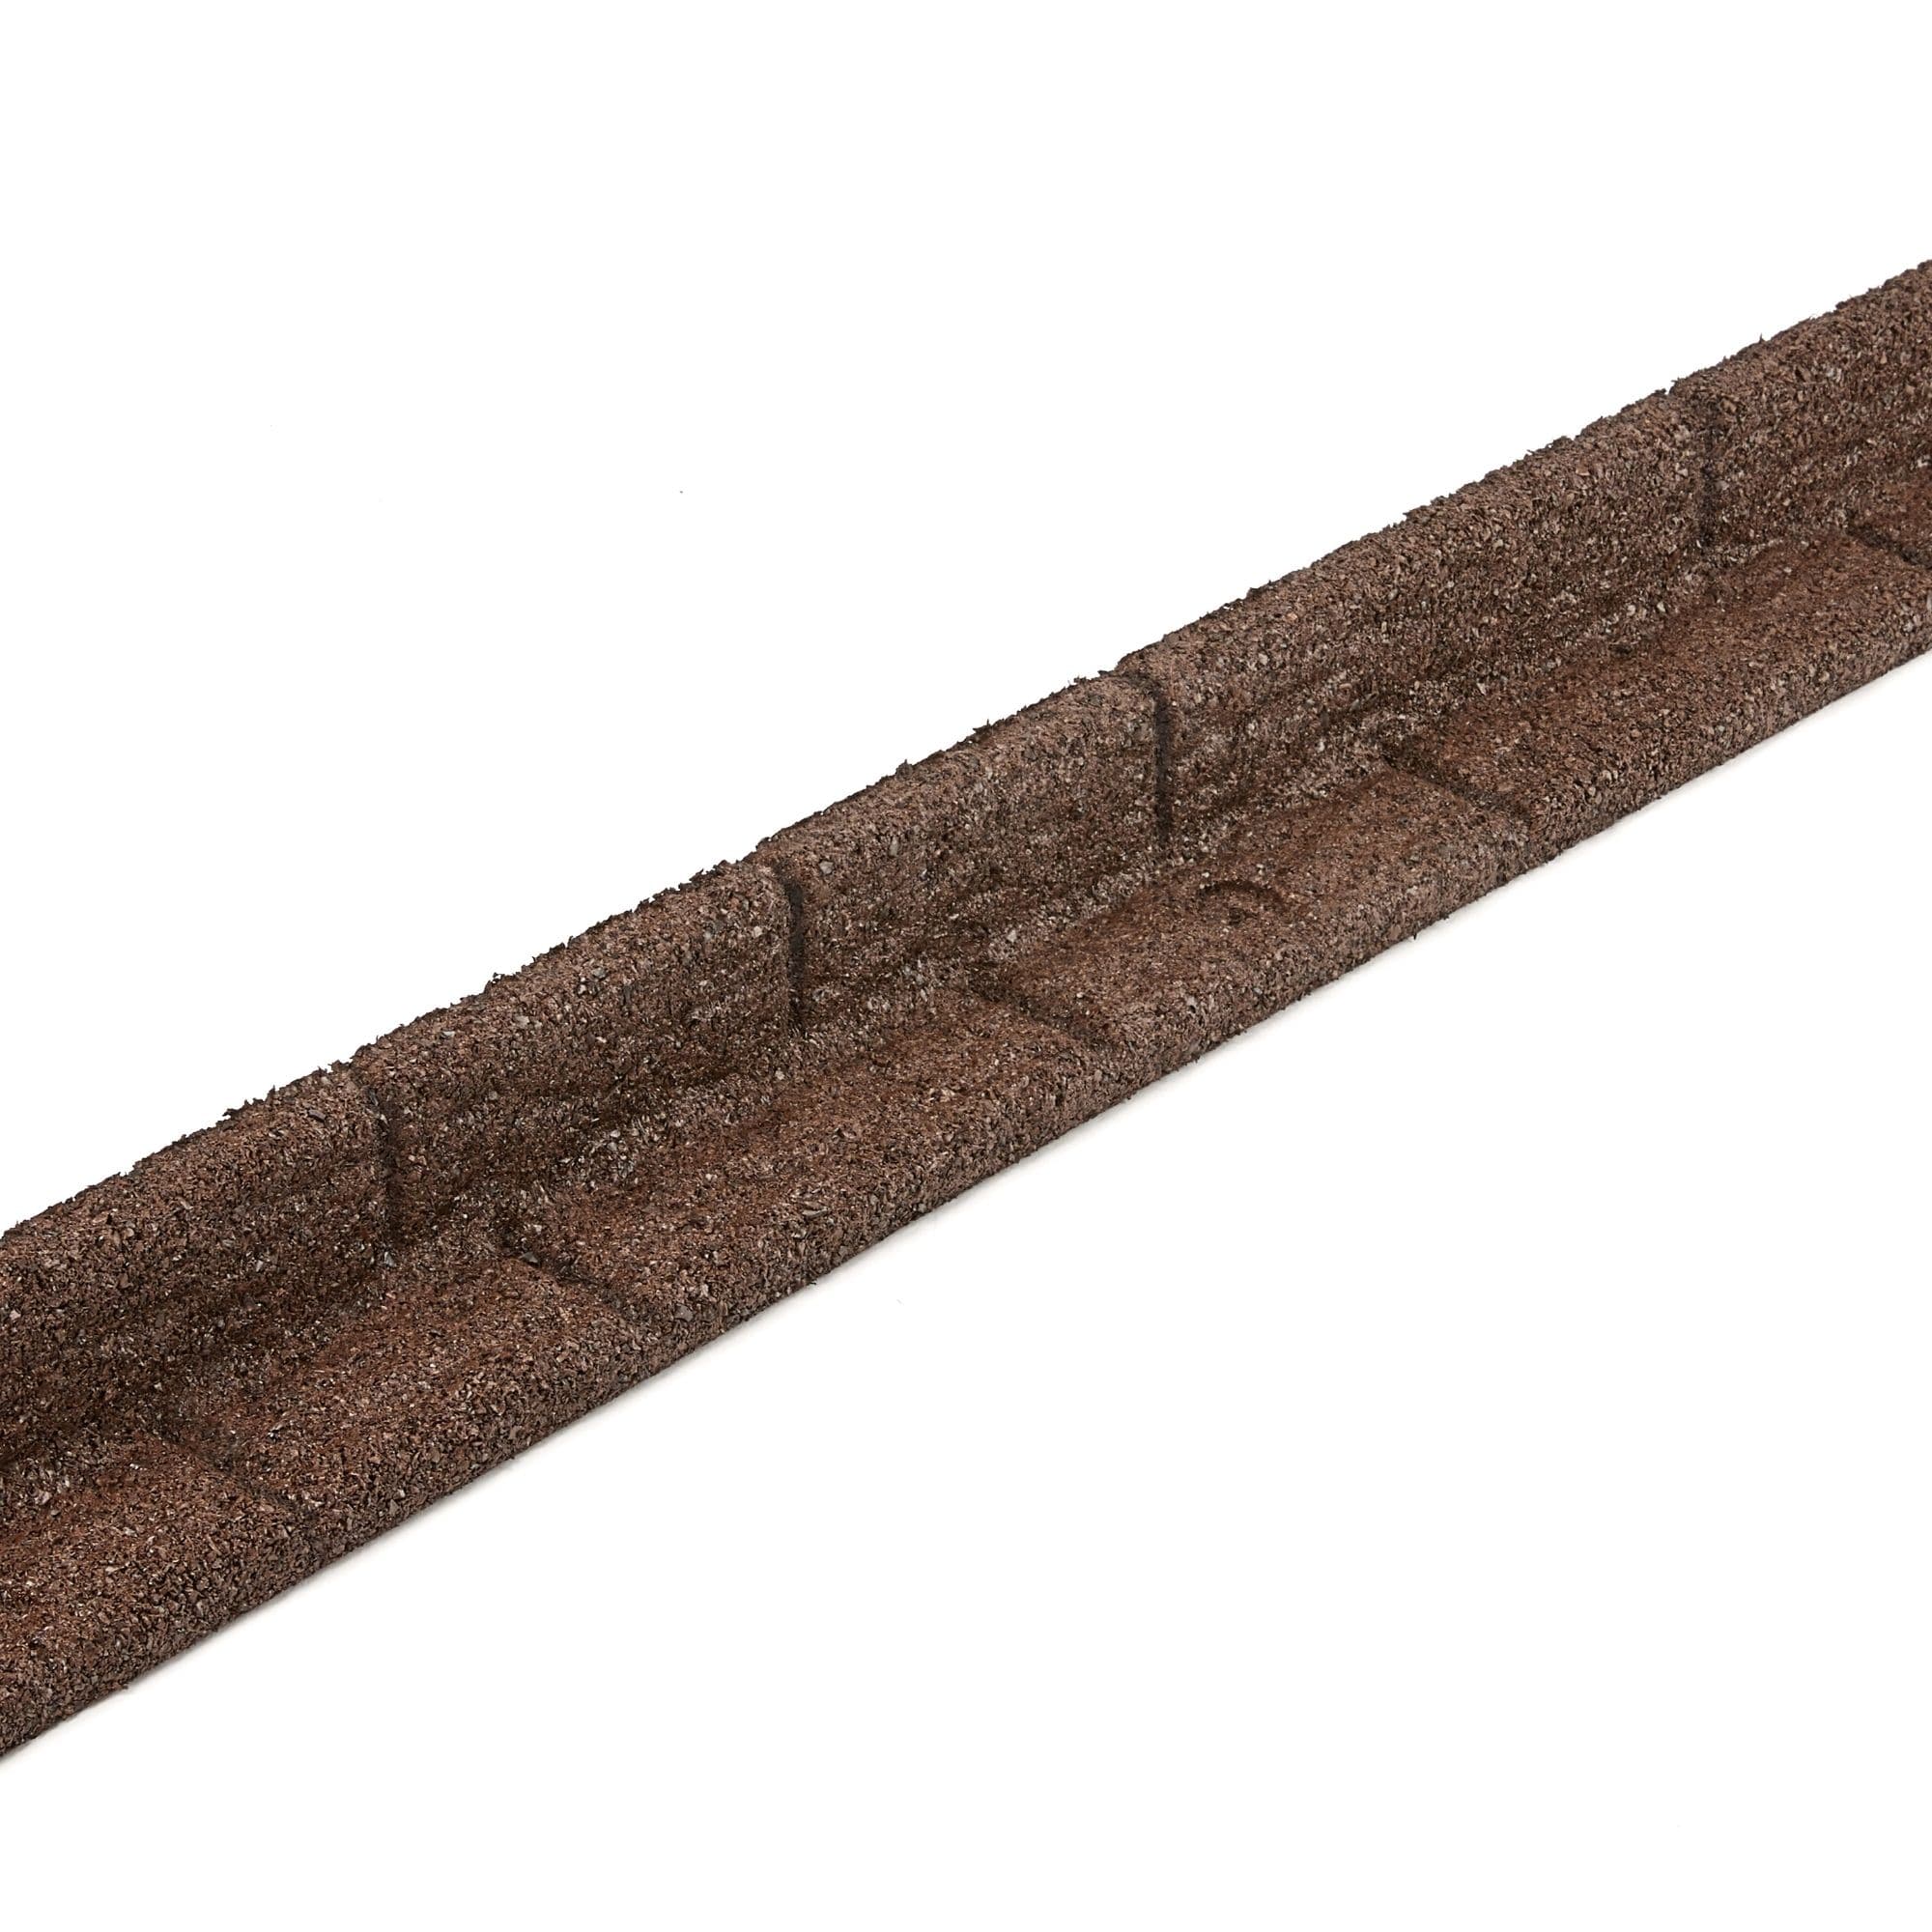 8 ft. x 4 in. 14-Gauge Brown Steel Landscape Edging (5-Pack)